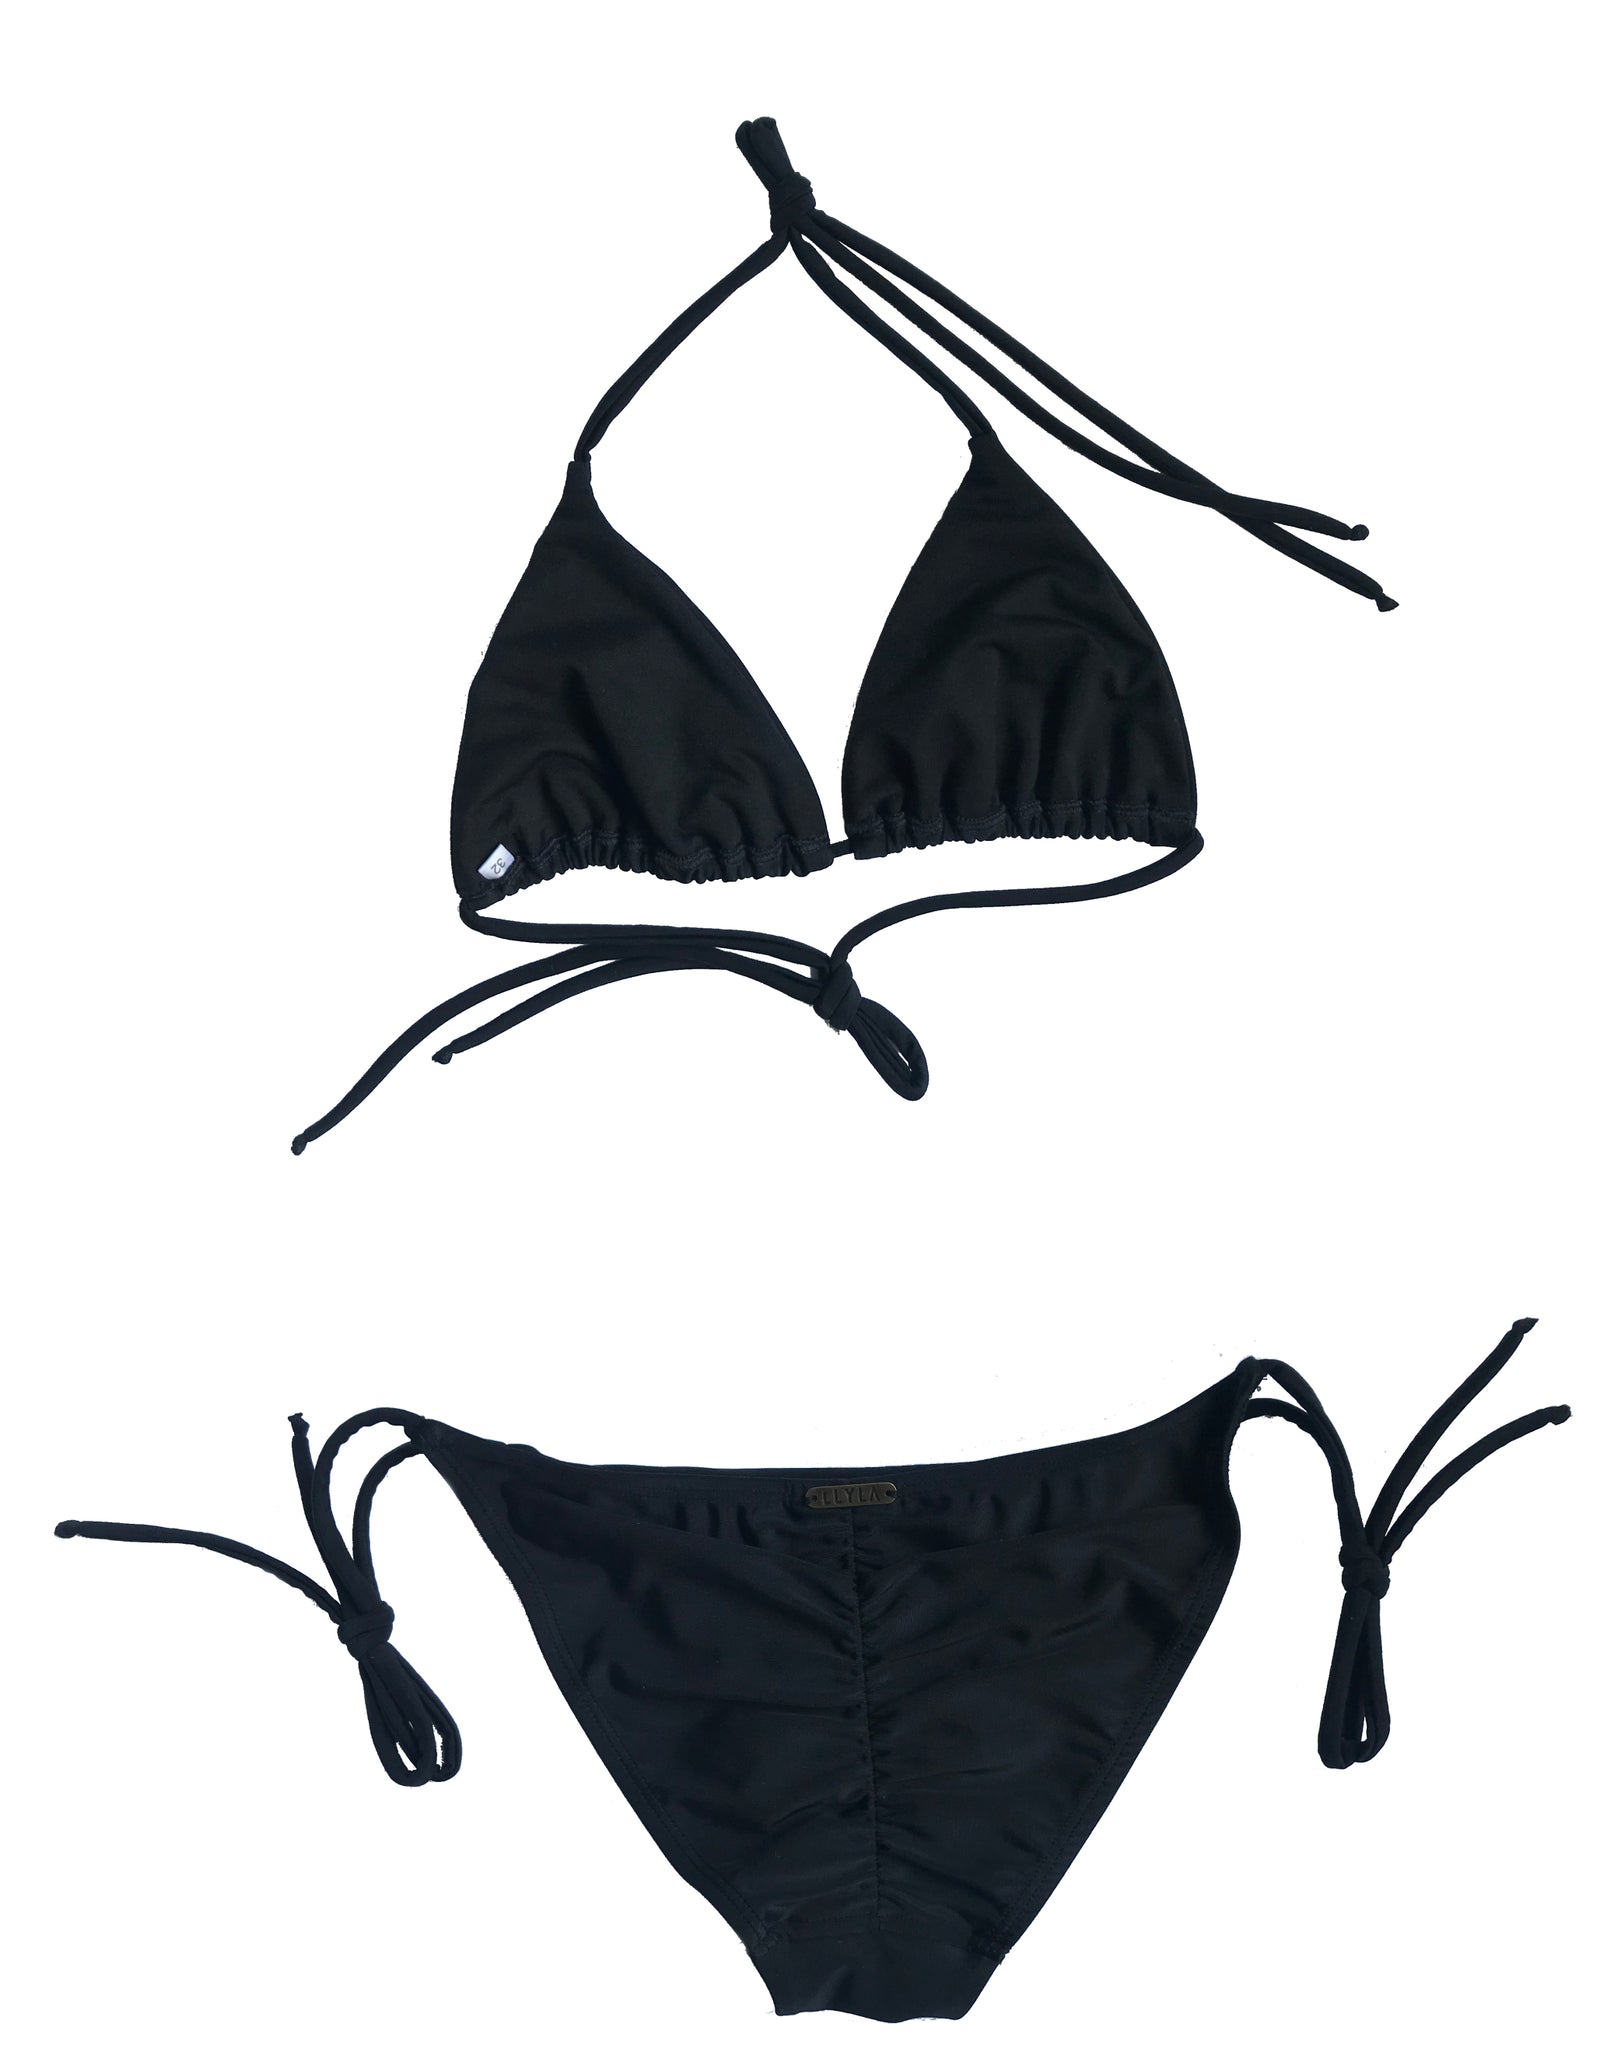 LLYLA Black String Bikini Set - Halterneck triangle bra with